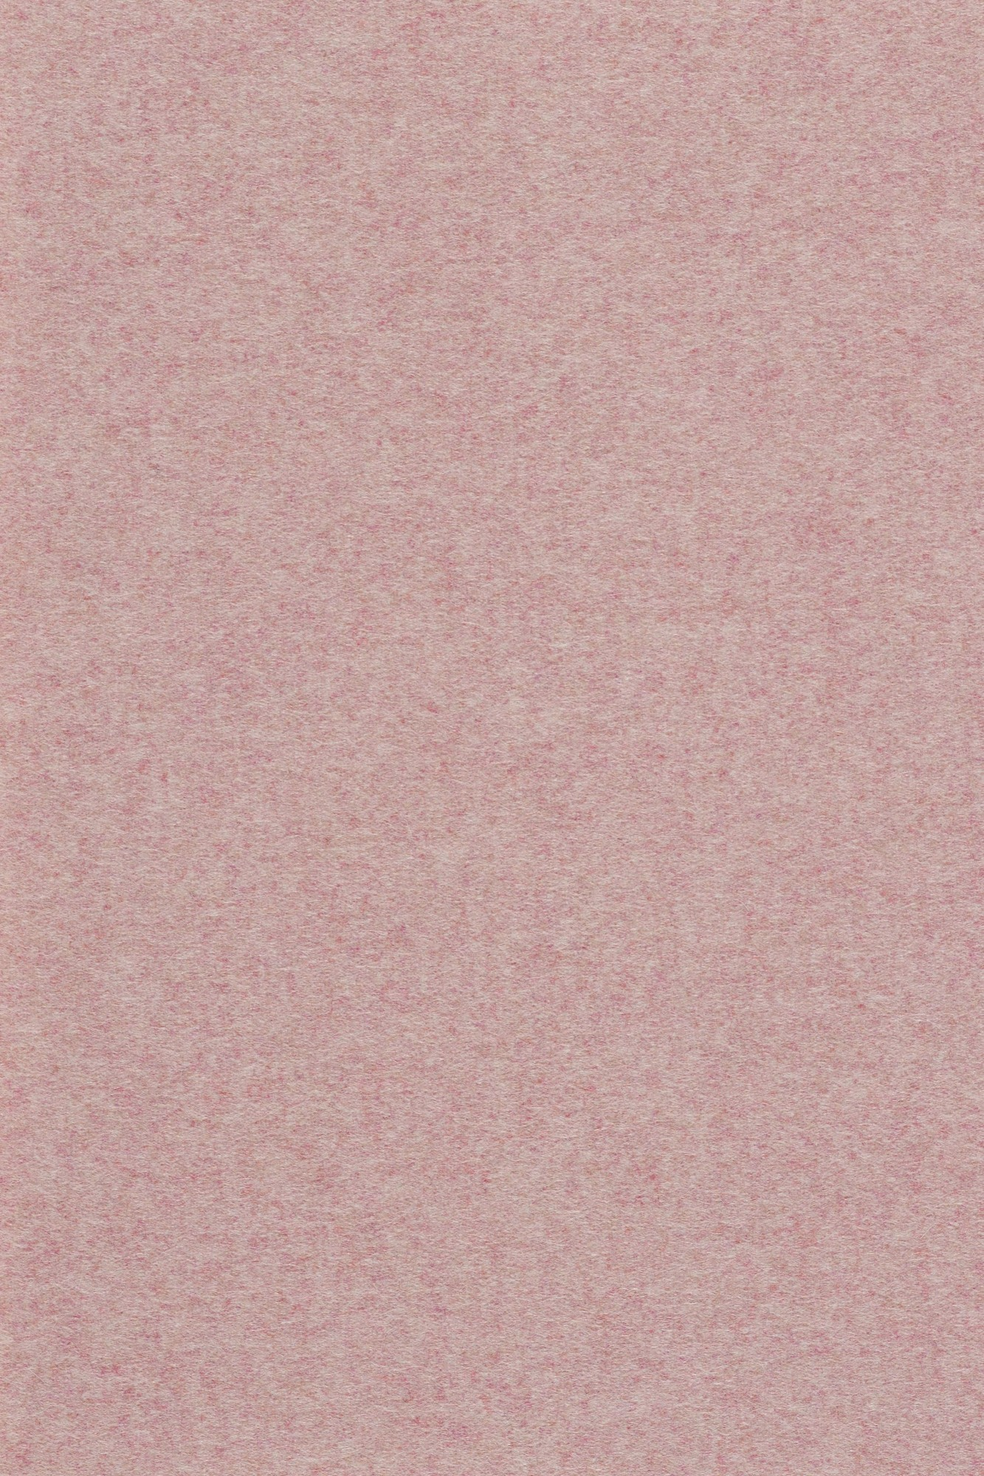 Fabric sample Divina MD 613 pink